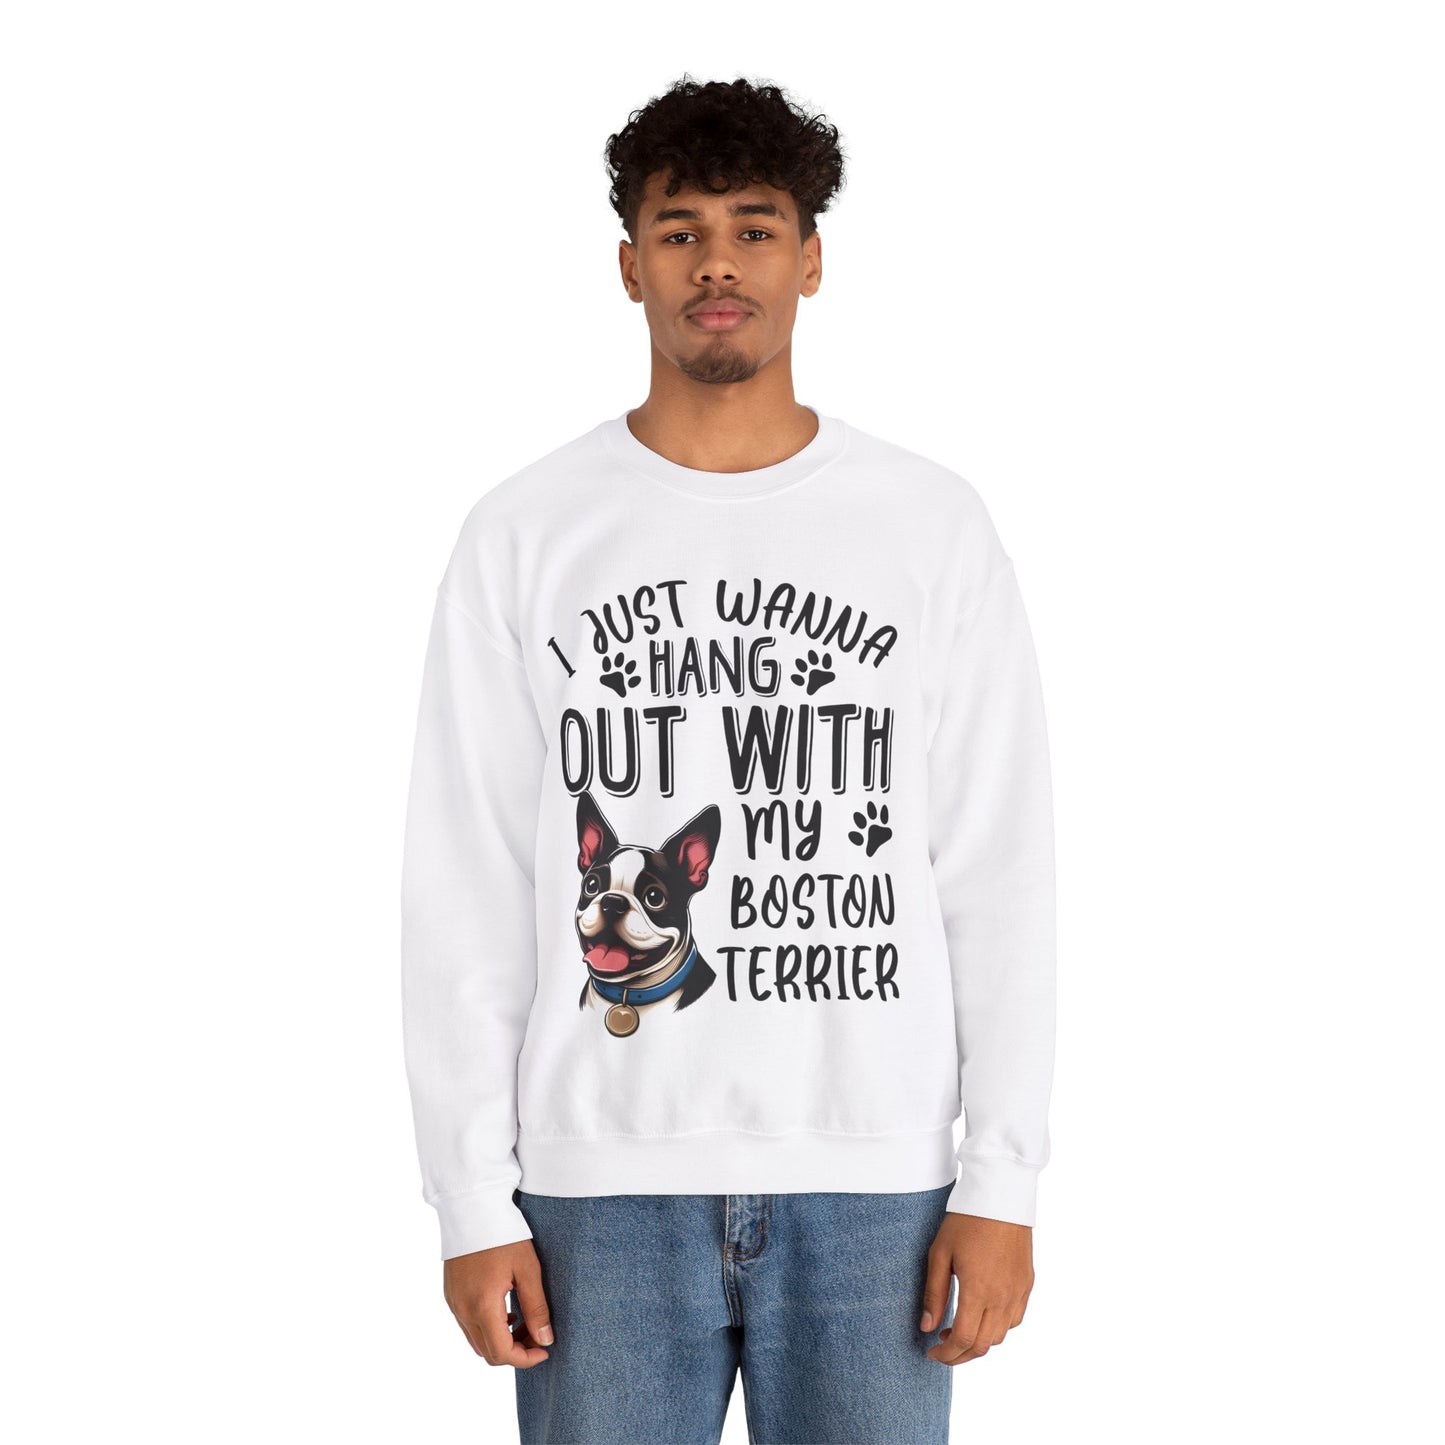 Clancy - Unisex Sweatshirt for Boston Terrier lovers